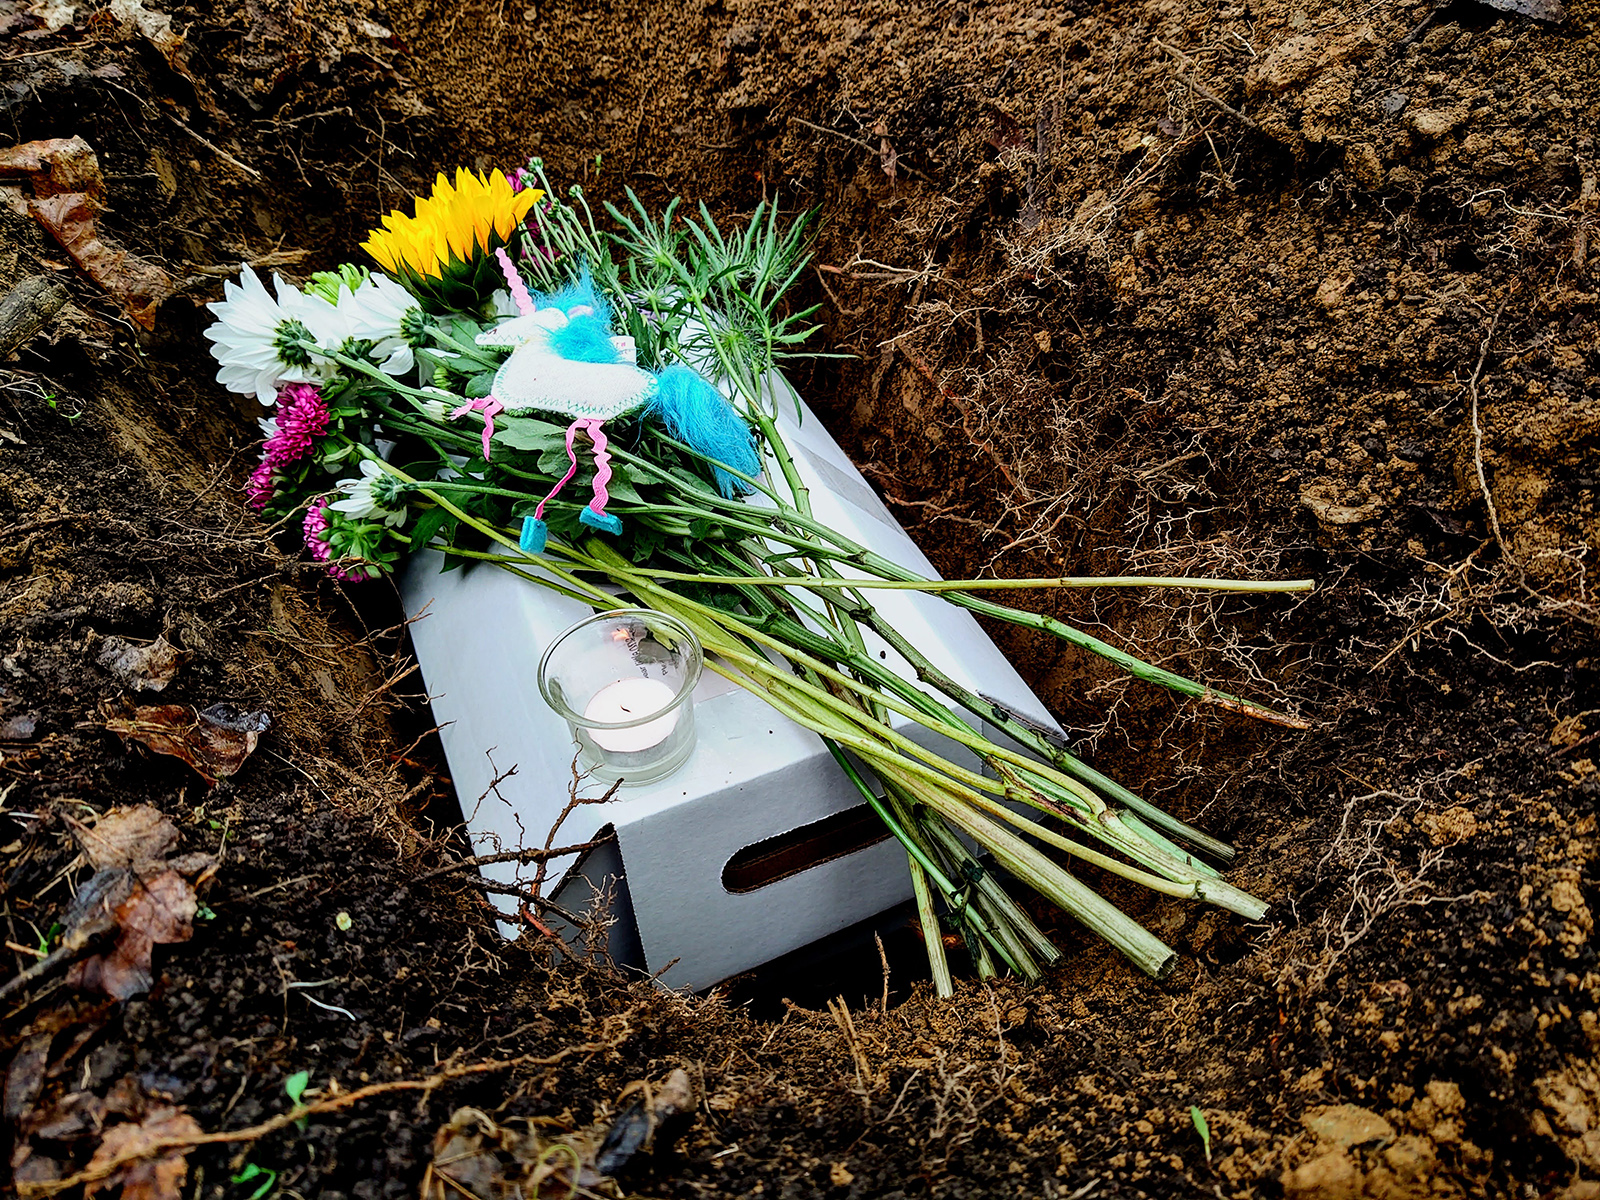 Burial following an animal funeral. (Photo courtesy Sarah Bowen)